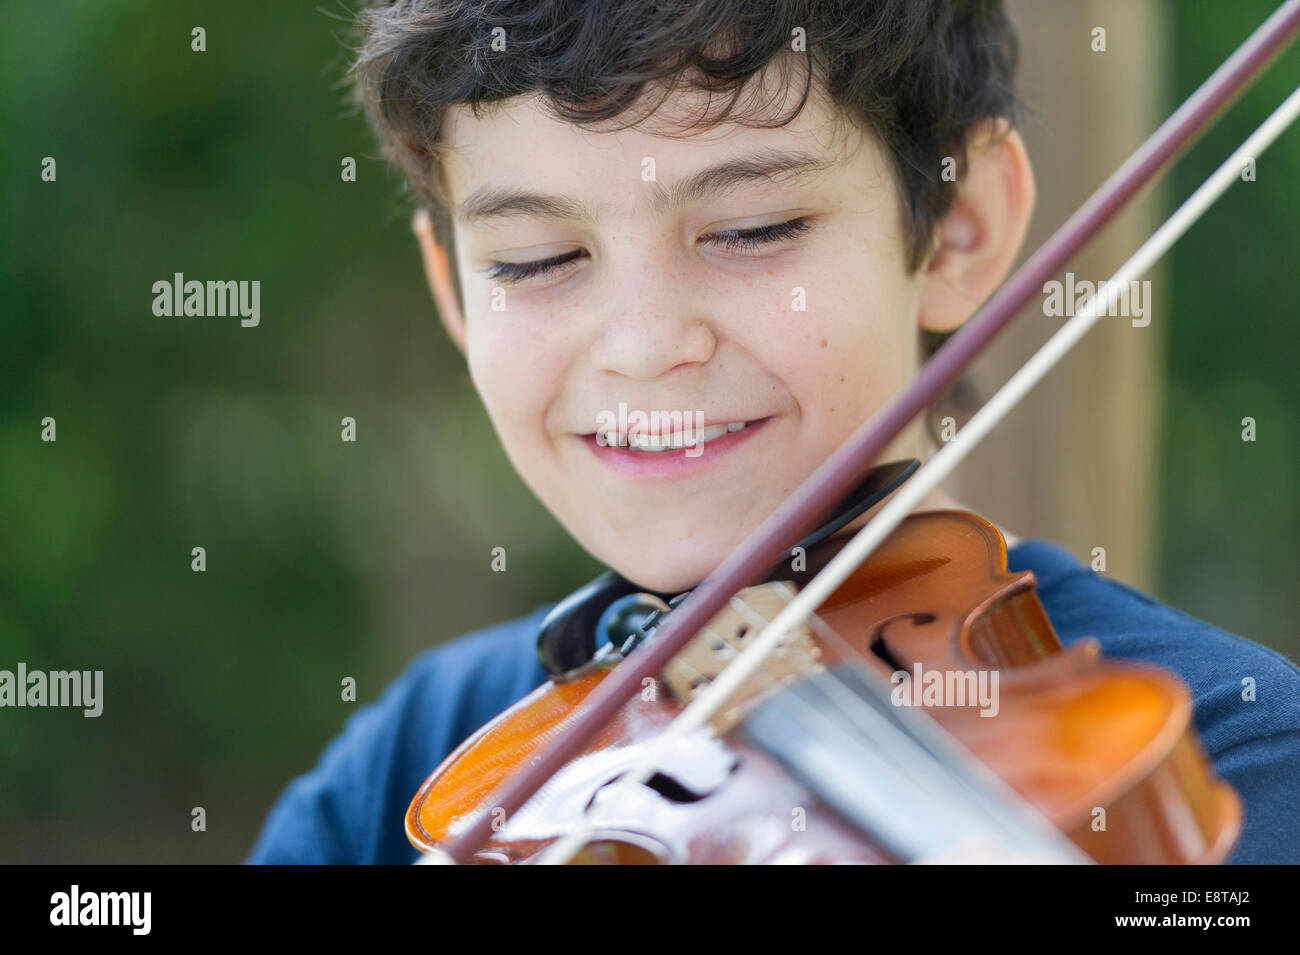 Hispanic boy playing violin Stock Photo